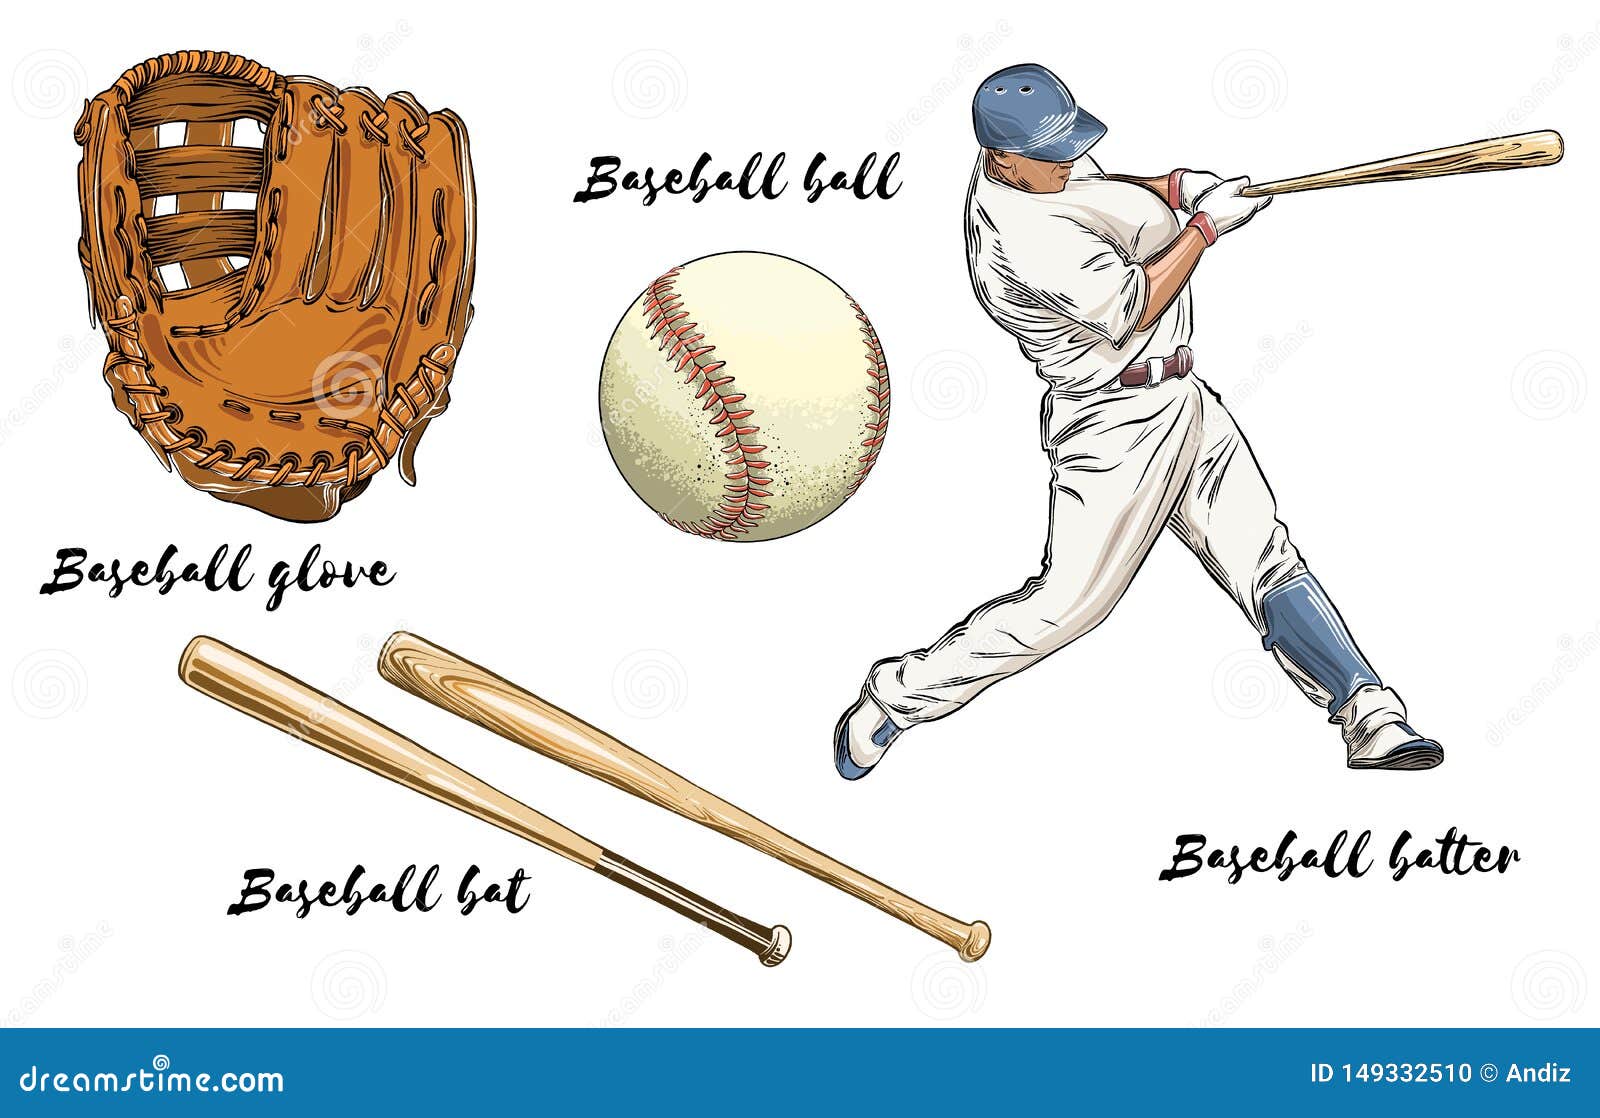 Baseball bat hand drawn